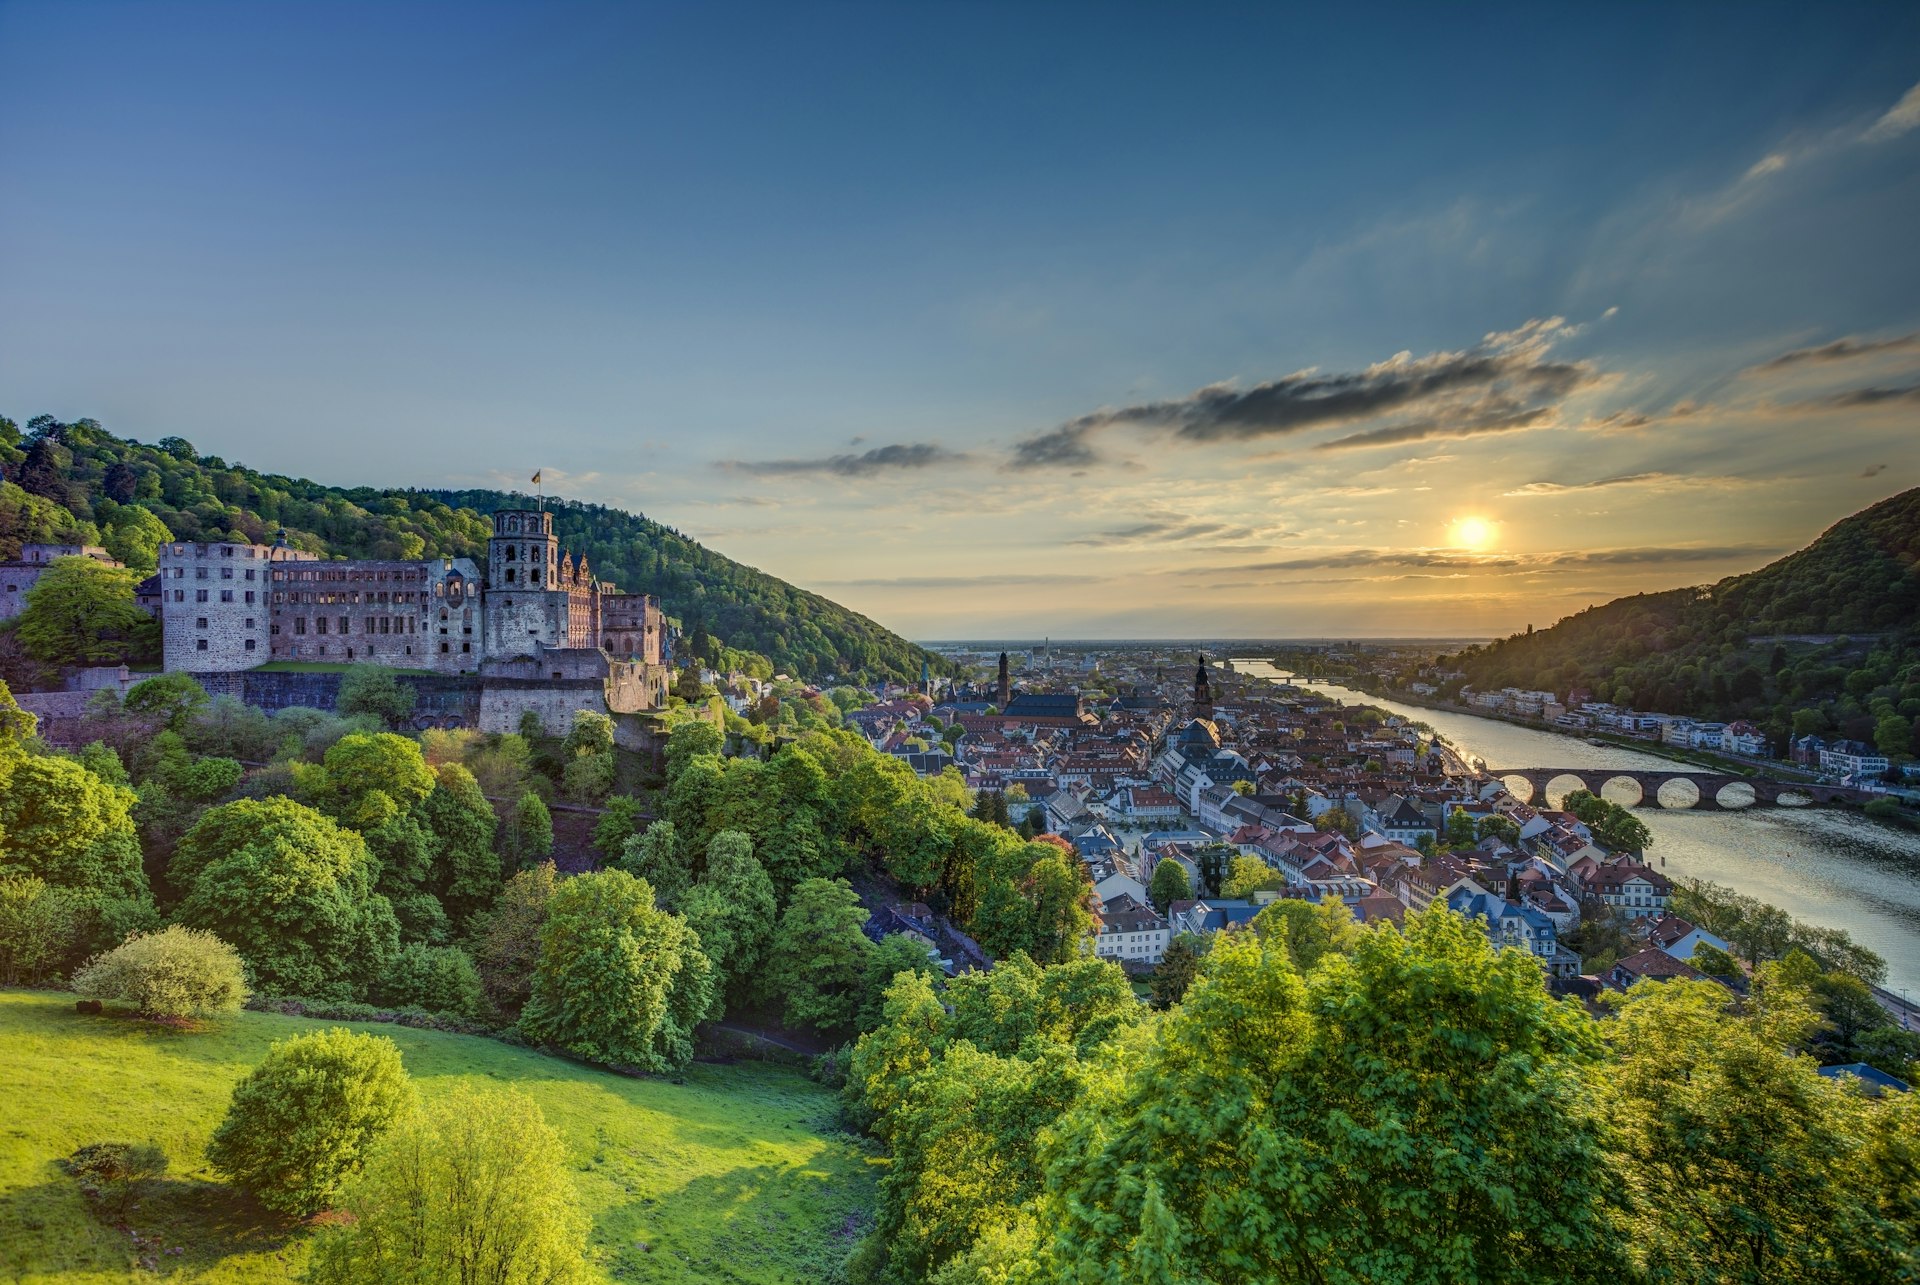 Heidelberg Castle and Neckar River in Heidelberg, Germany